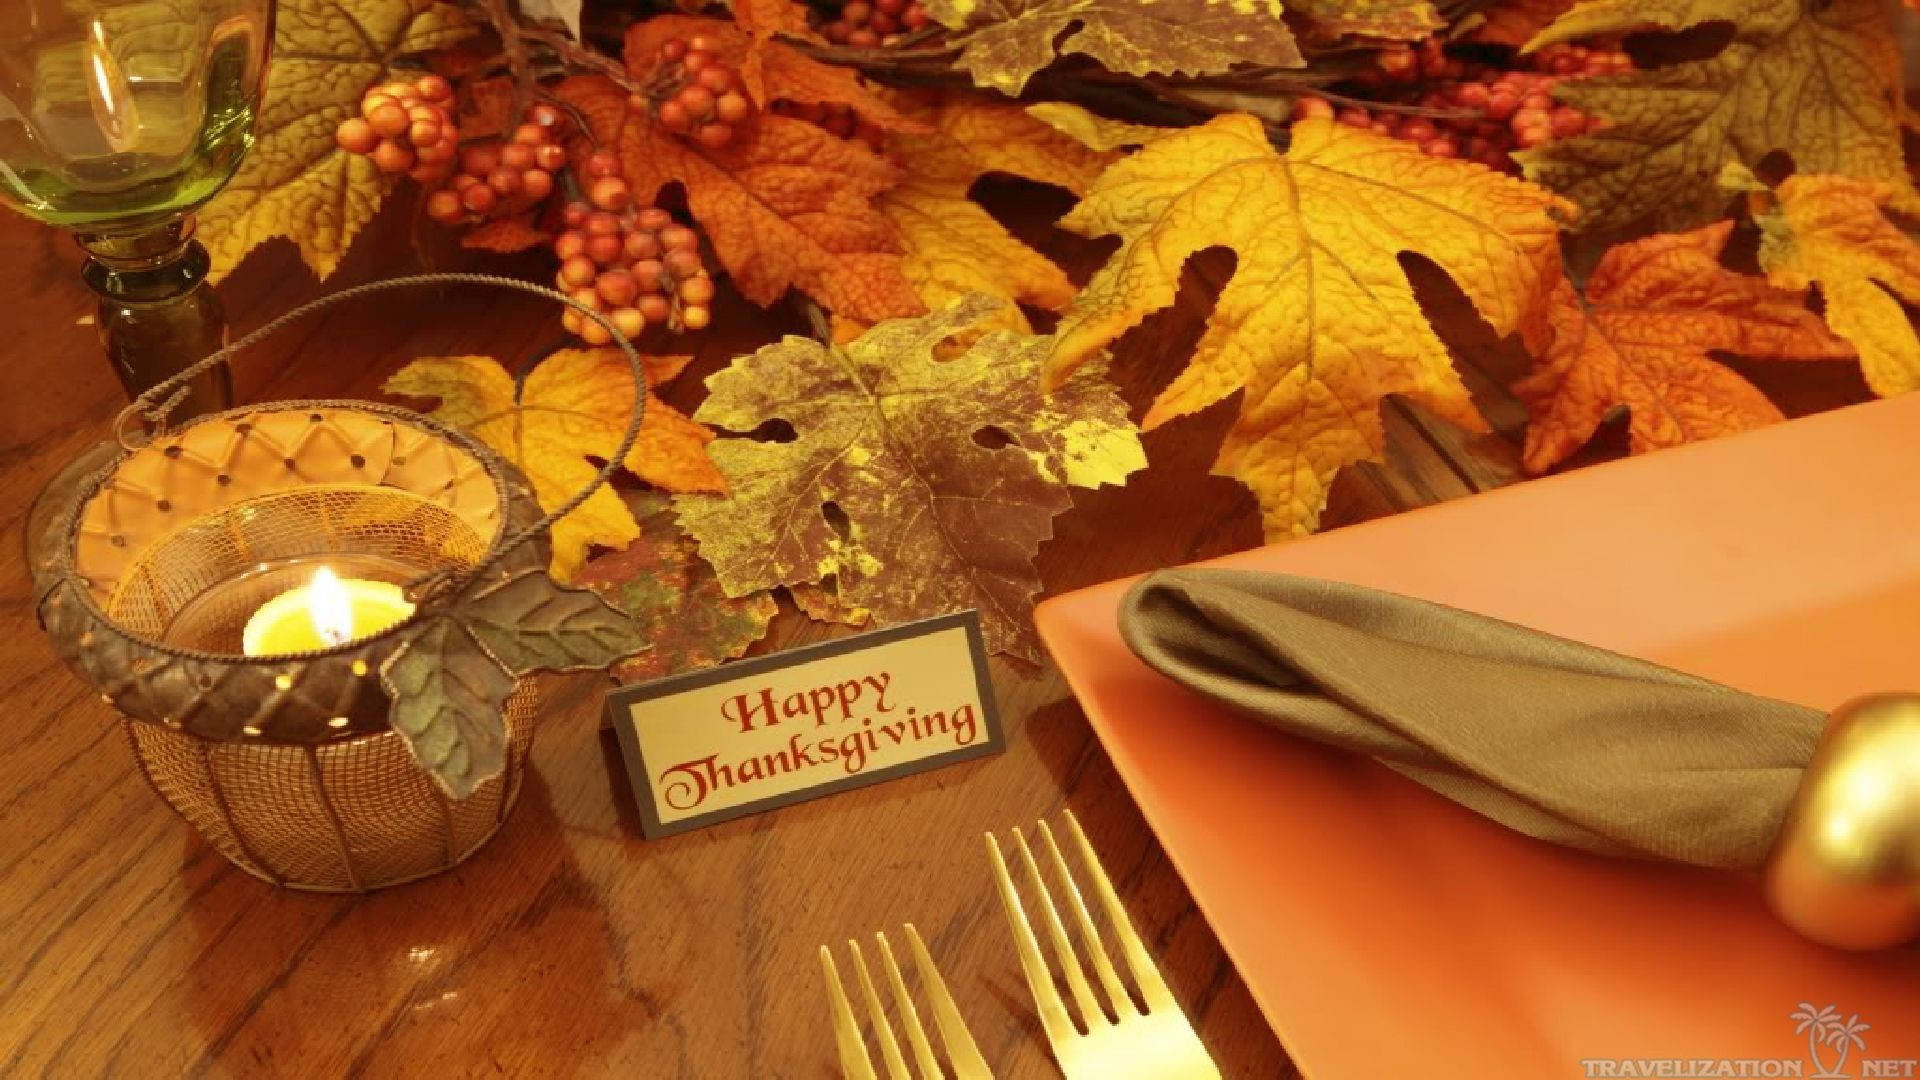 "harvest Season Celebrations - A Traditional Thanksgiving Table Setup" Wallpaper